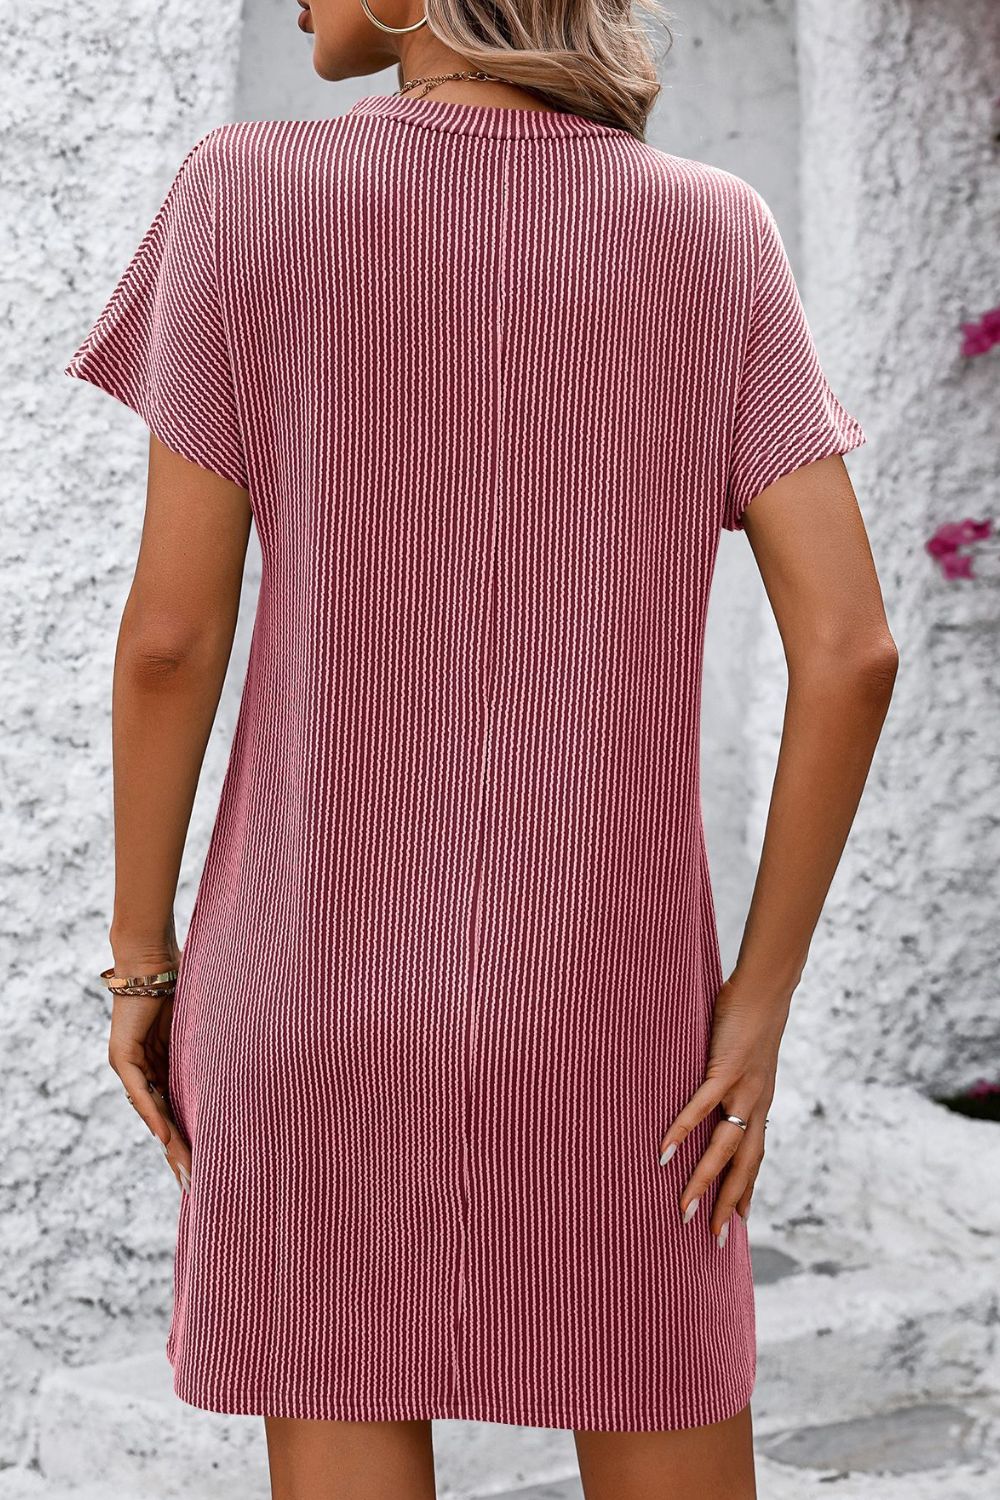 Ribbed Striped Short Sleeve T-Shirt Dress